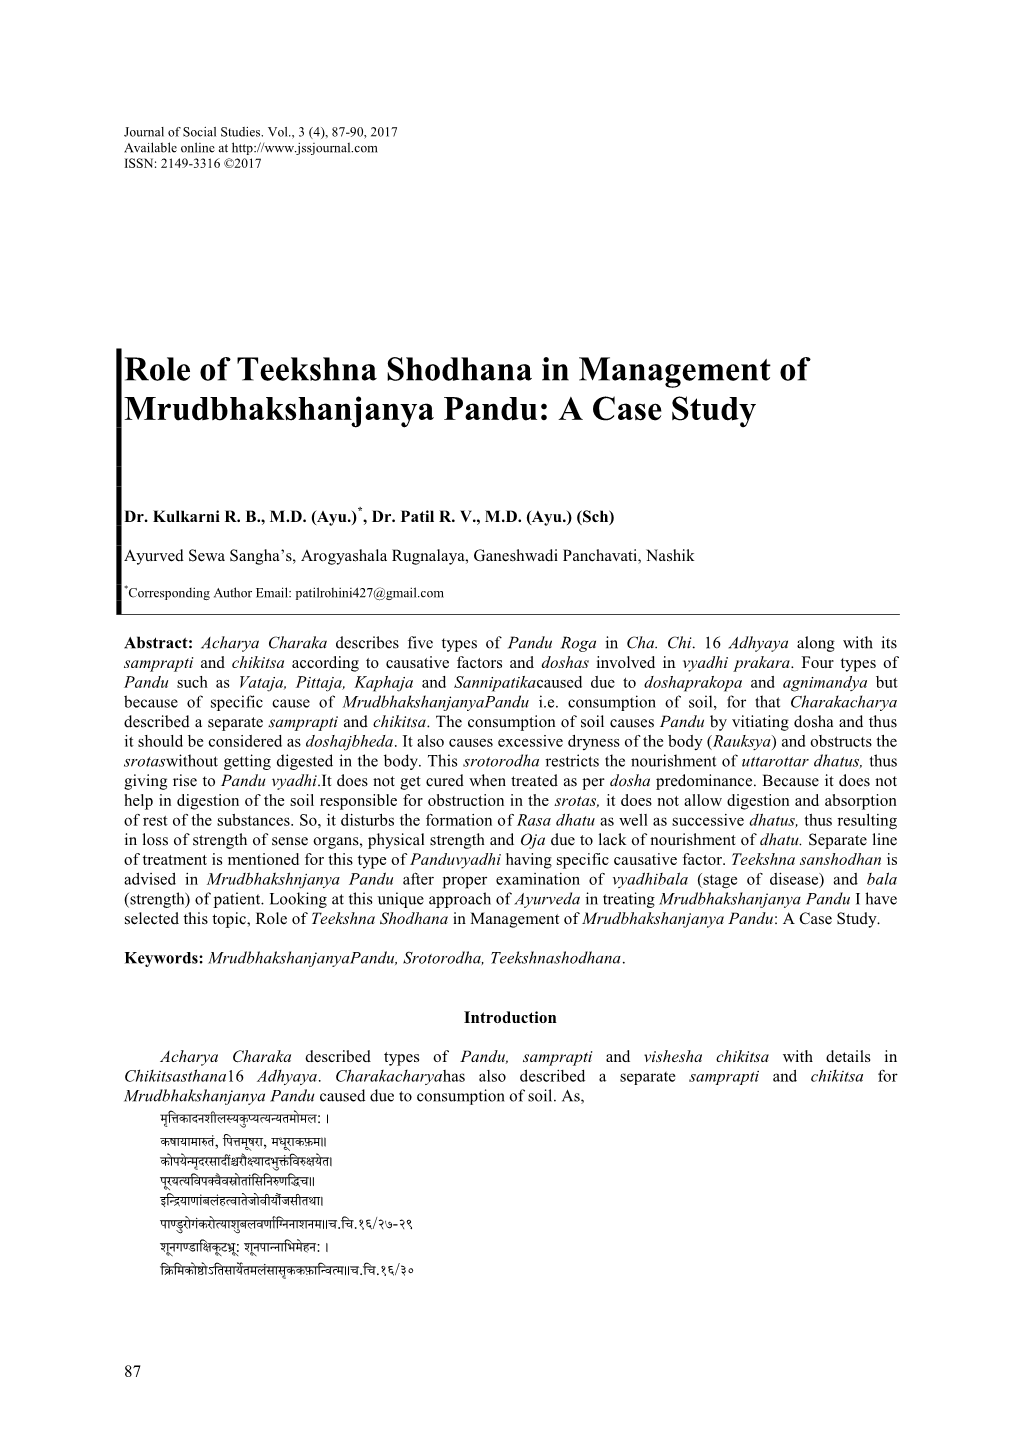 Role of Teekshna Shodhana in Management of Mrudbhakshanjanya Pandu: a Case Study